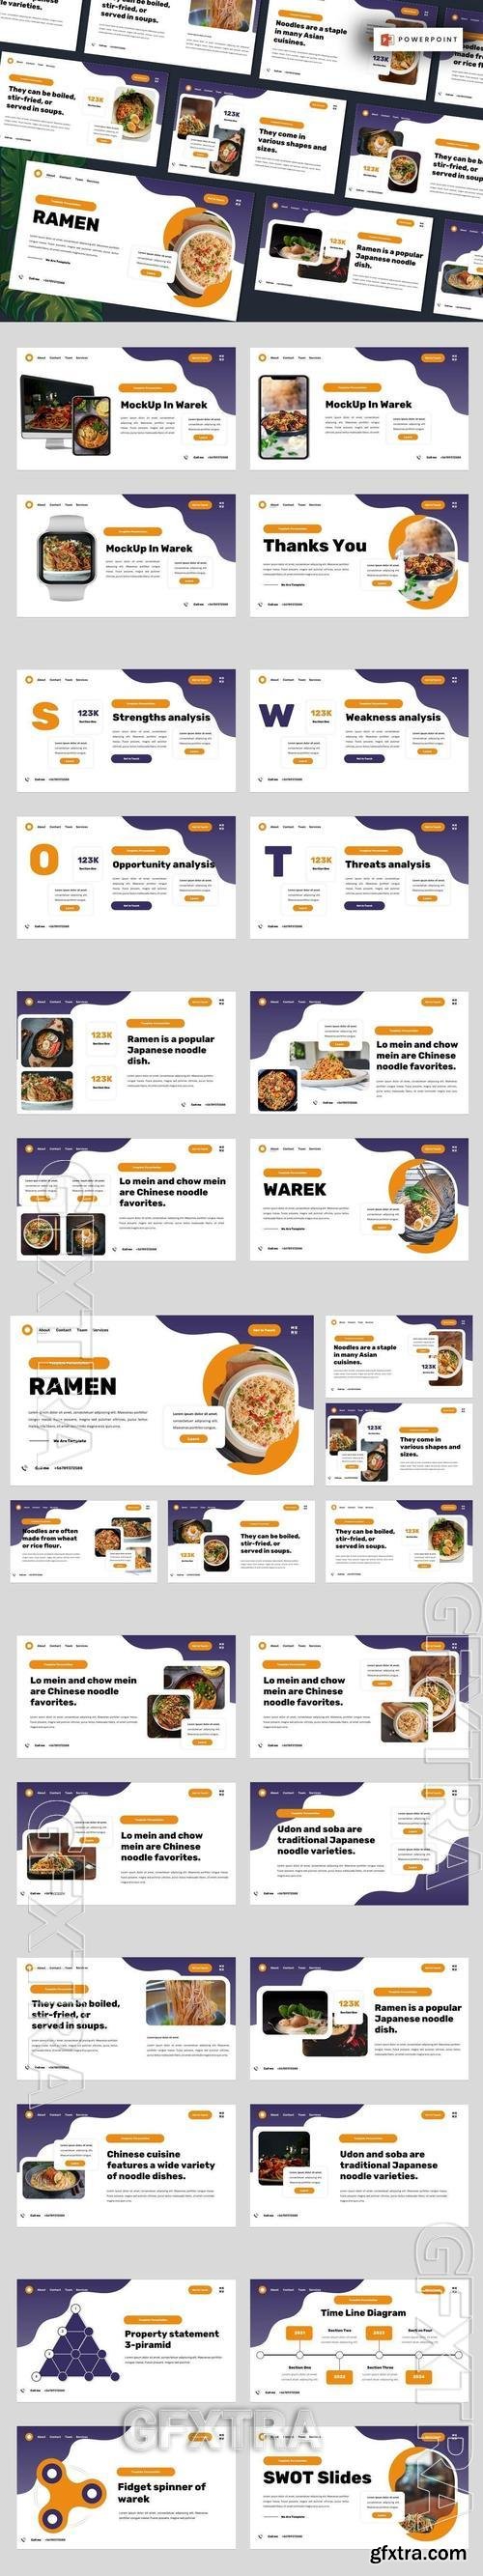 Ramen - Noodle & Japan Food Powerpoint Template B25NHF8